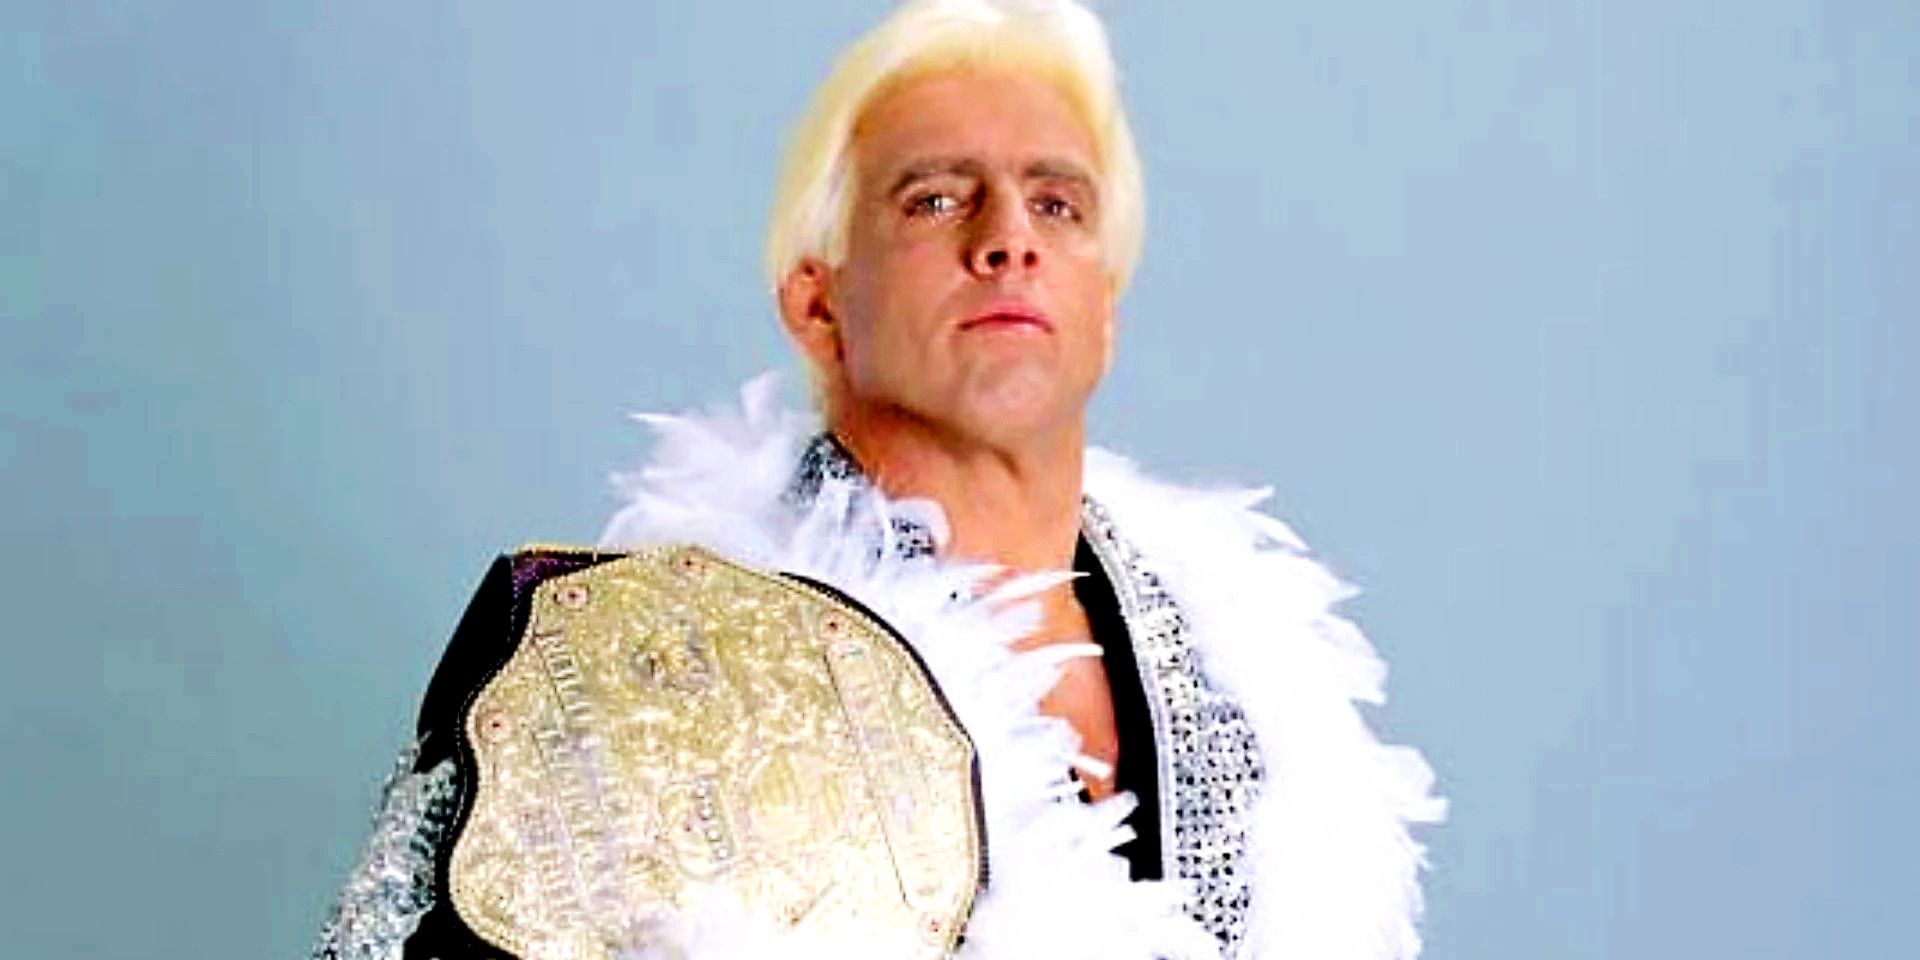 Ric Flair as WCW World Champion